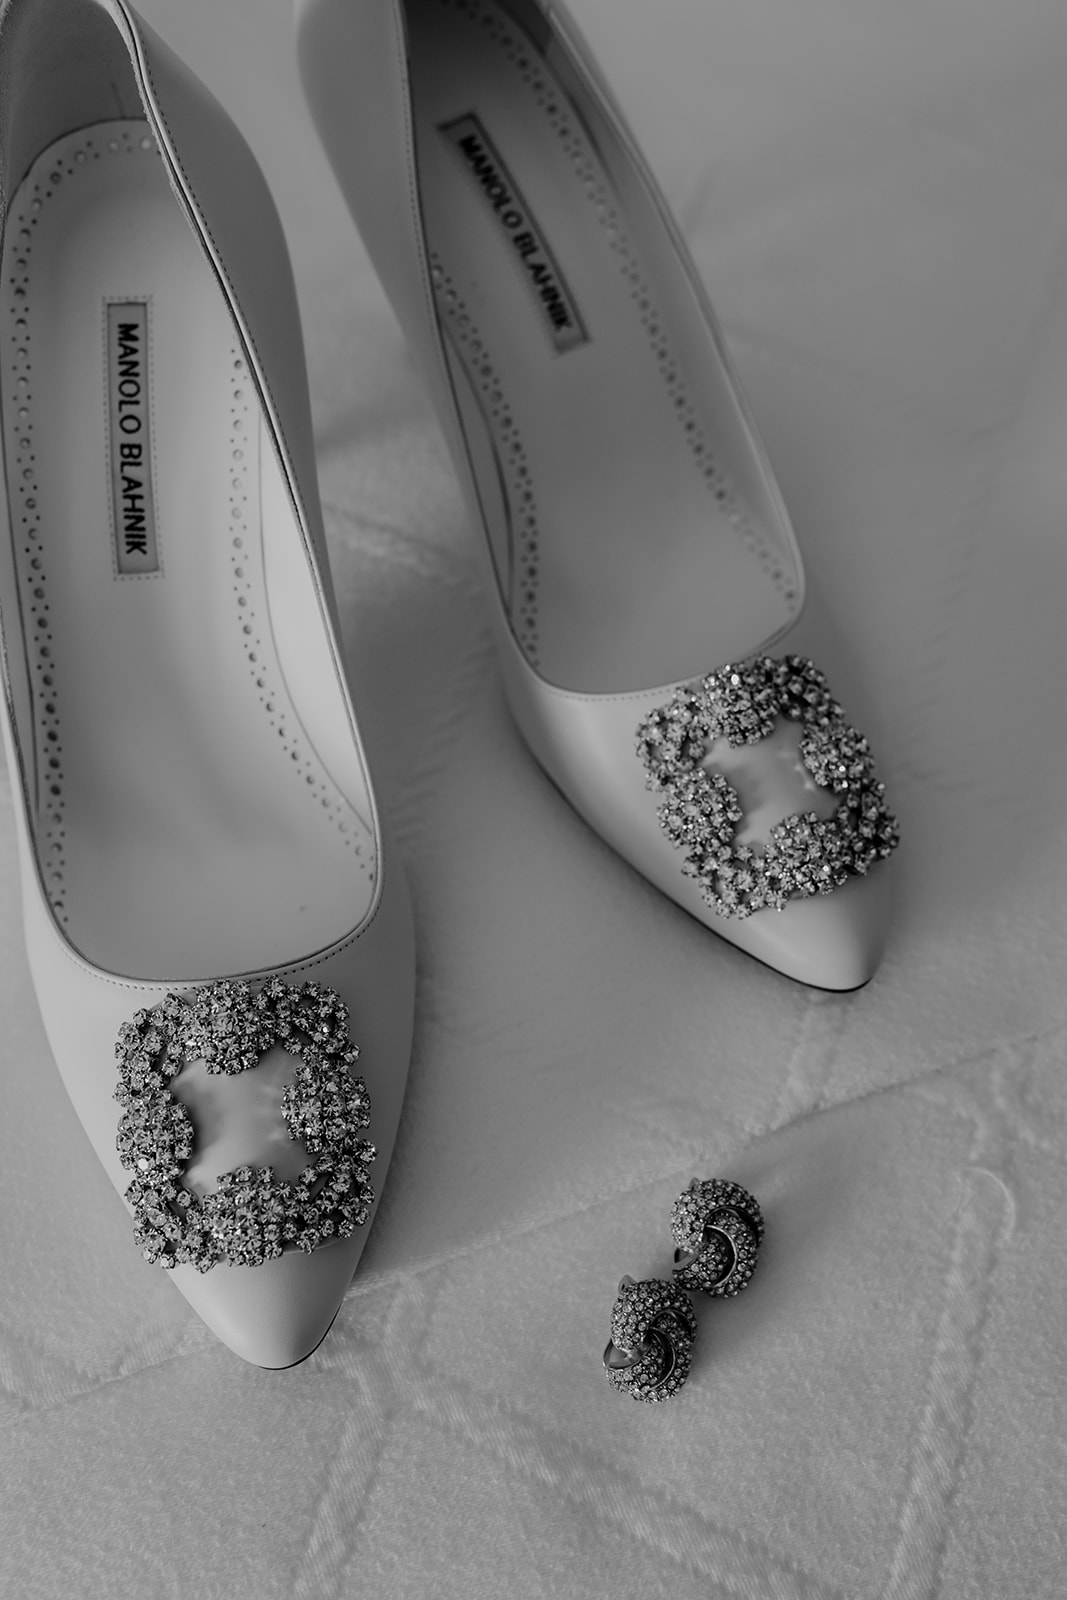 Bridal details in black and white for Hotel Bennett wedding